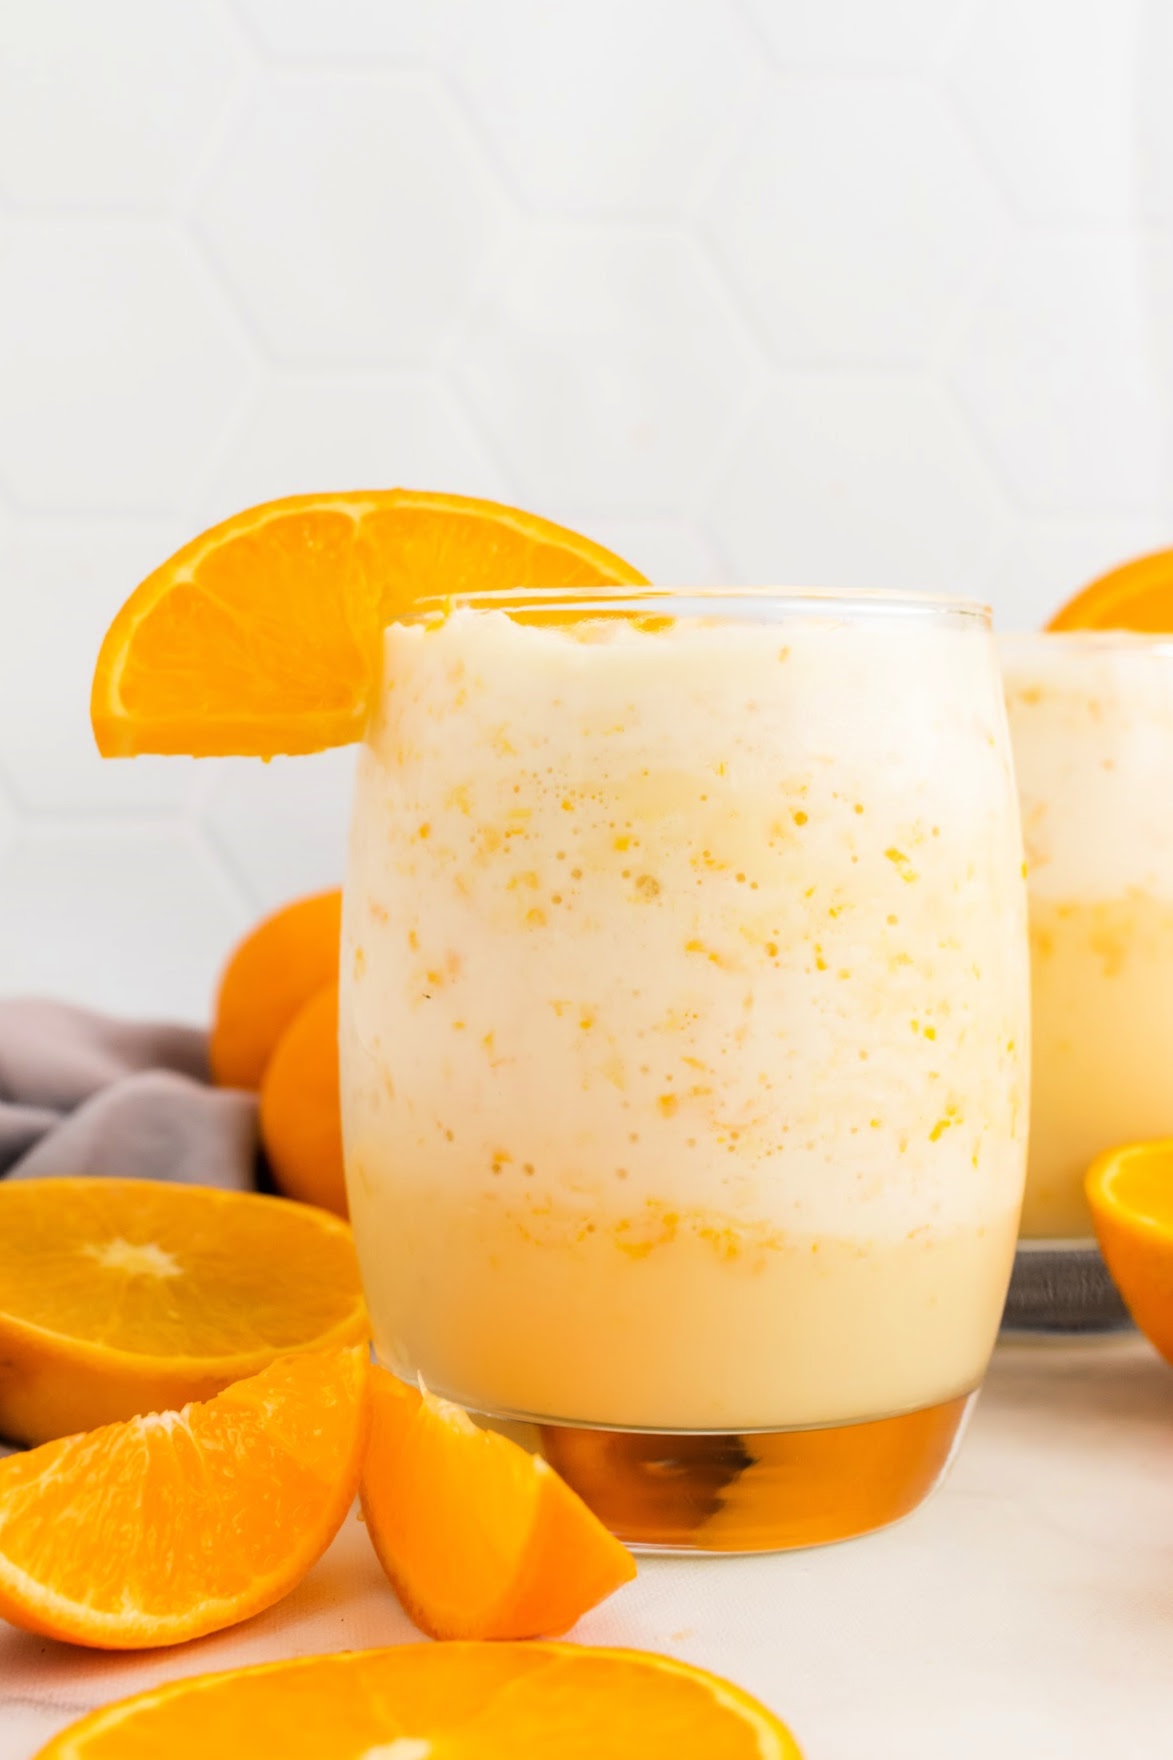 Creamy orange smoothie in a glass with fresh orange slices.